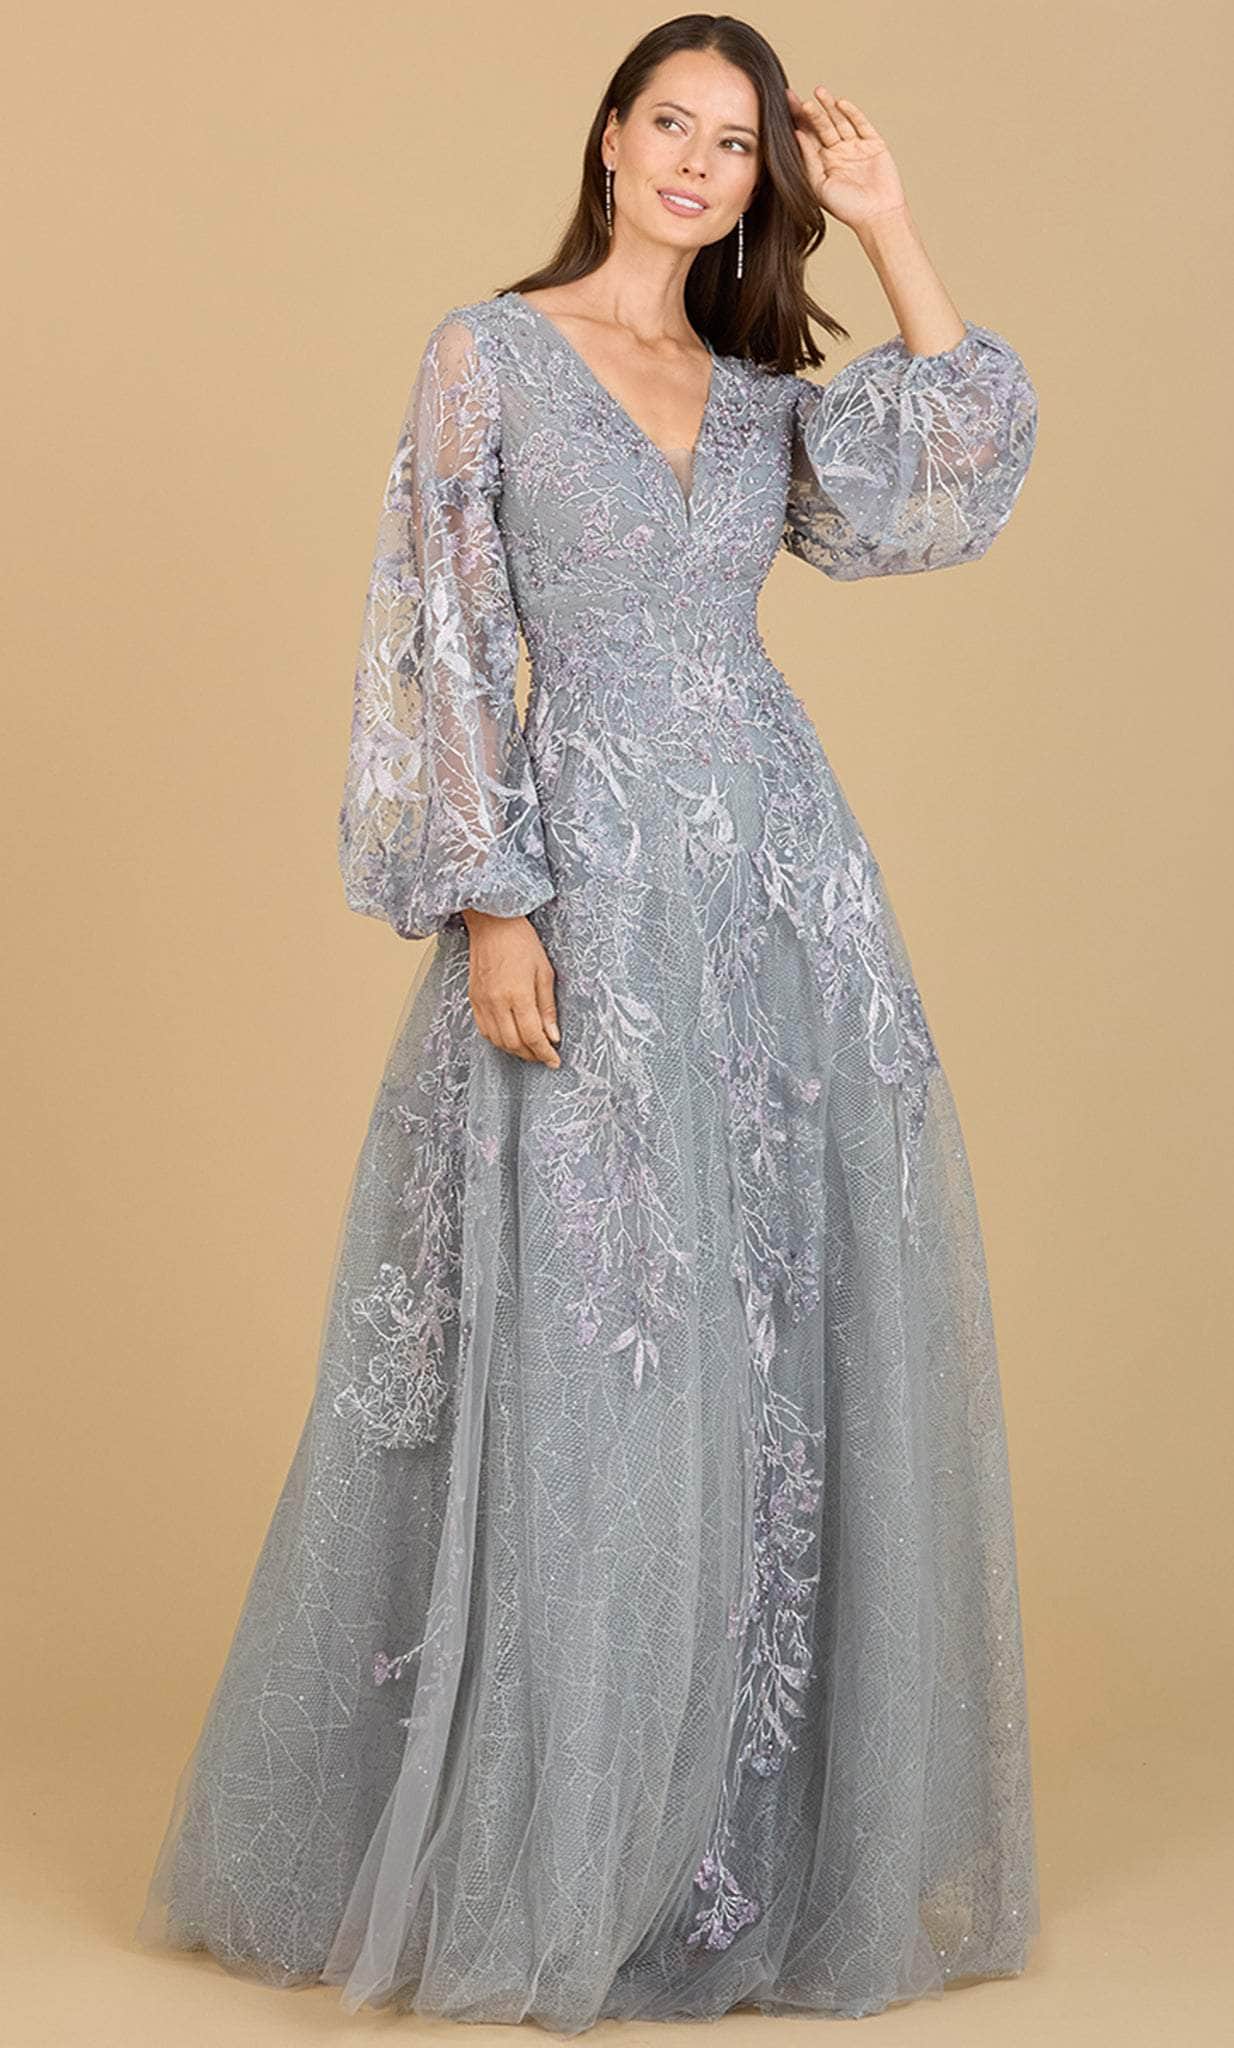 Lara Dresses 29195 - Laced Tulle Semi-Ballgown
